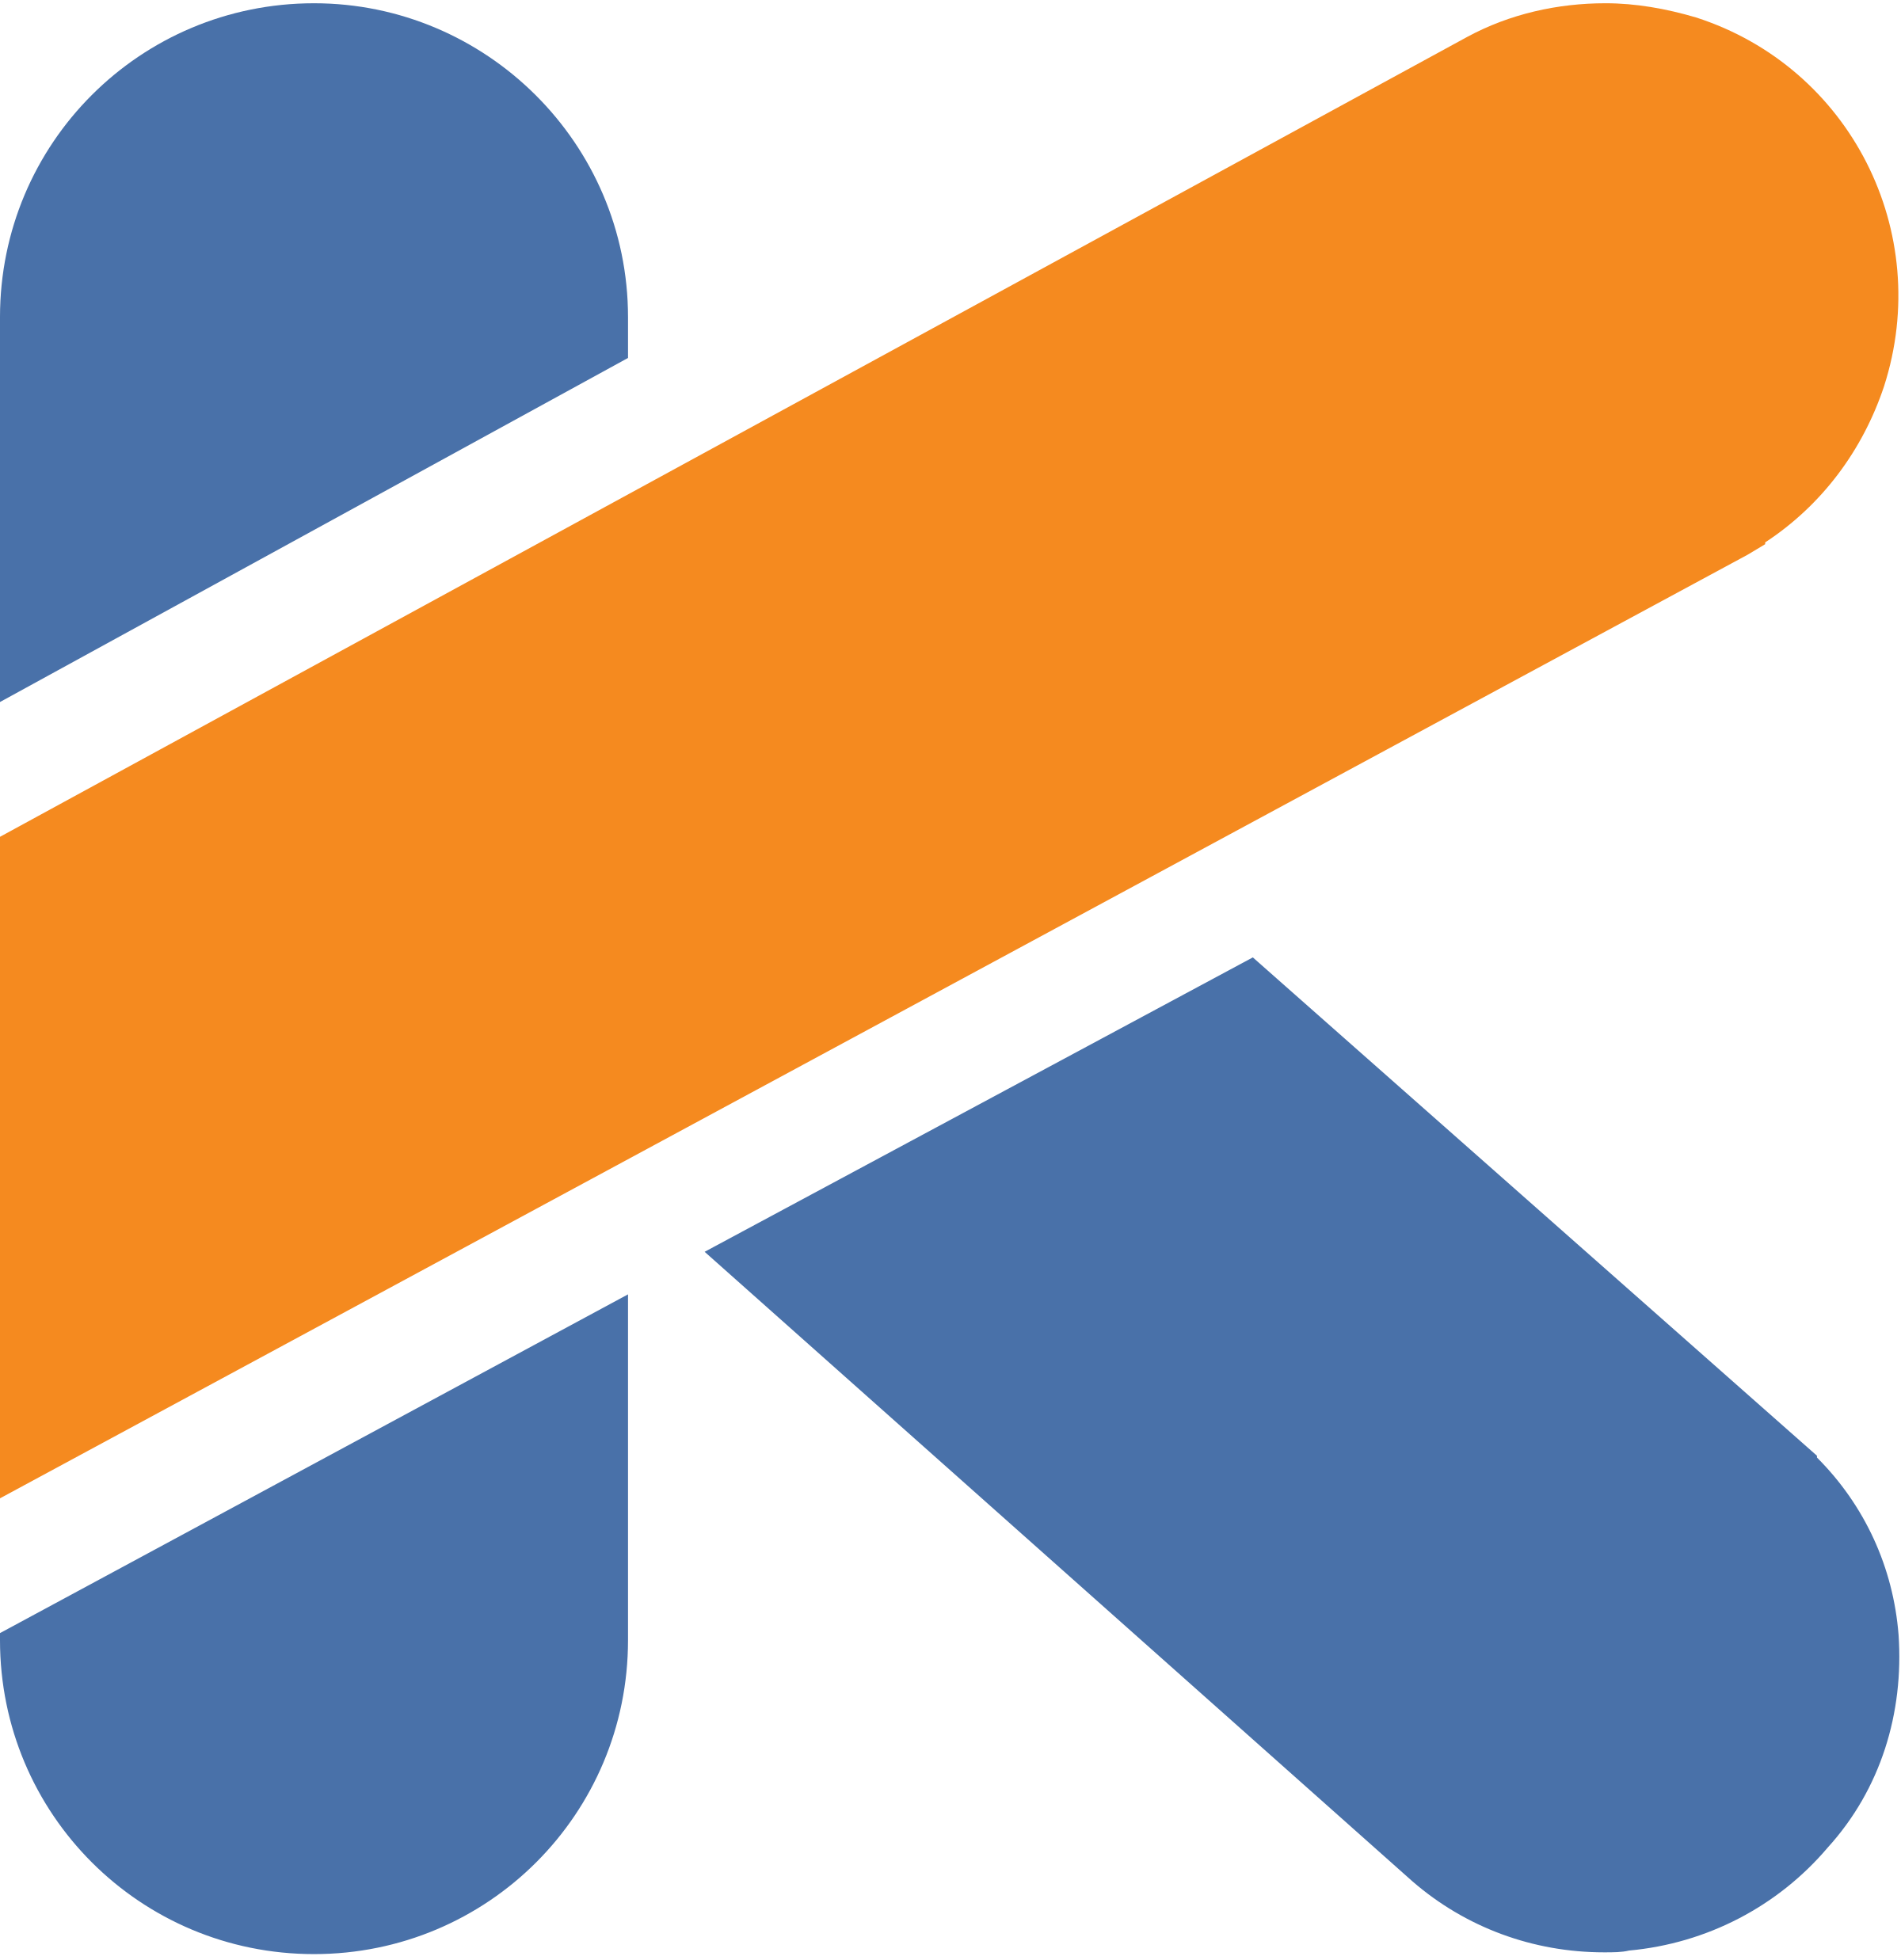 Kotlin - Kotlin Logo, Hd Png 